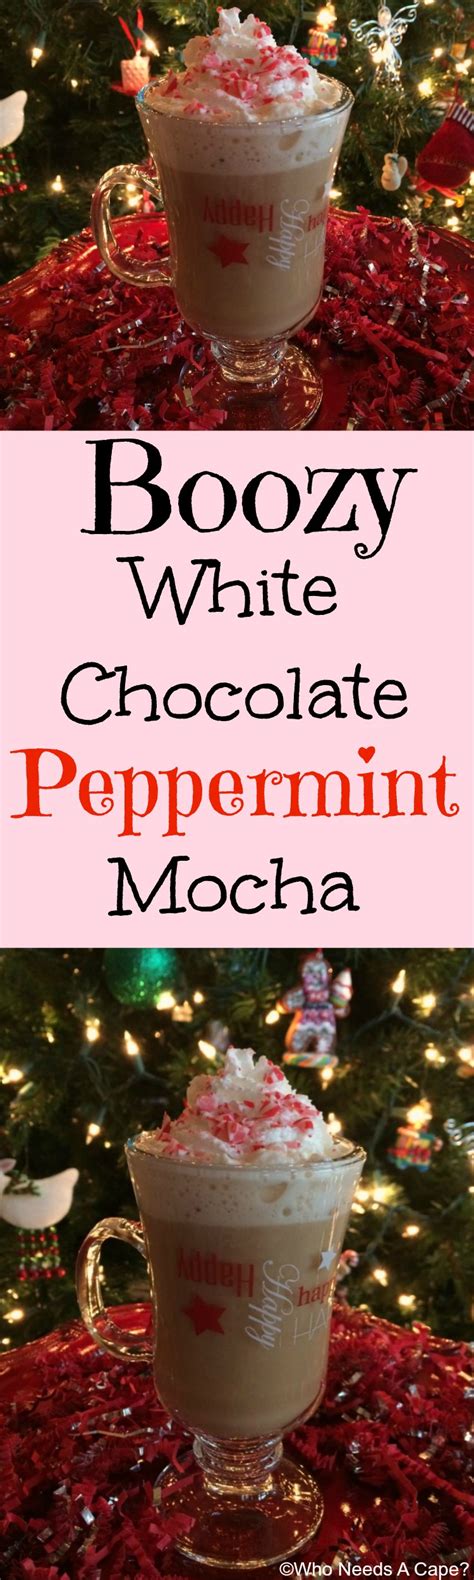 Boozy White Chocolate Peppermint Mocha